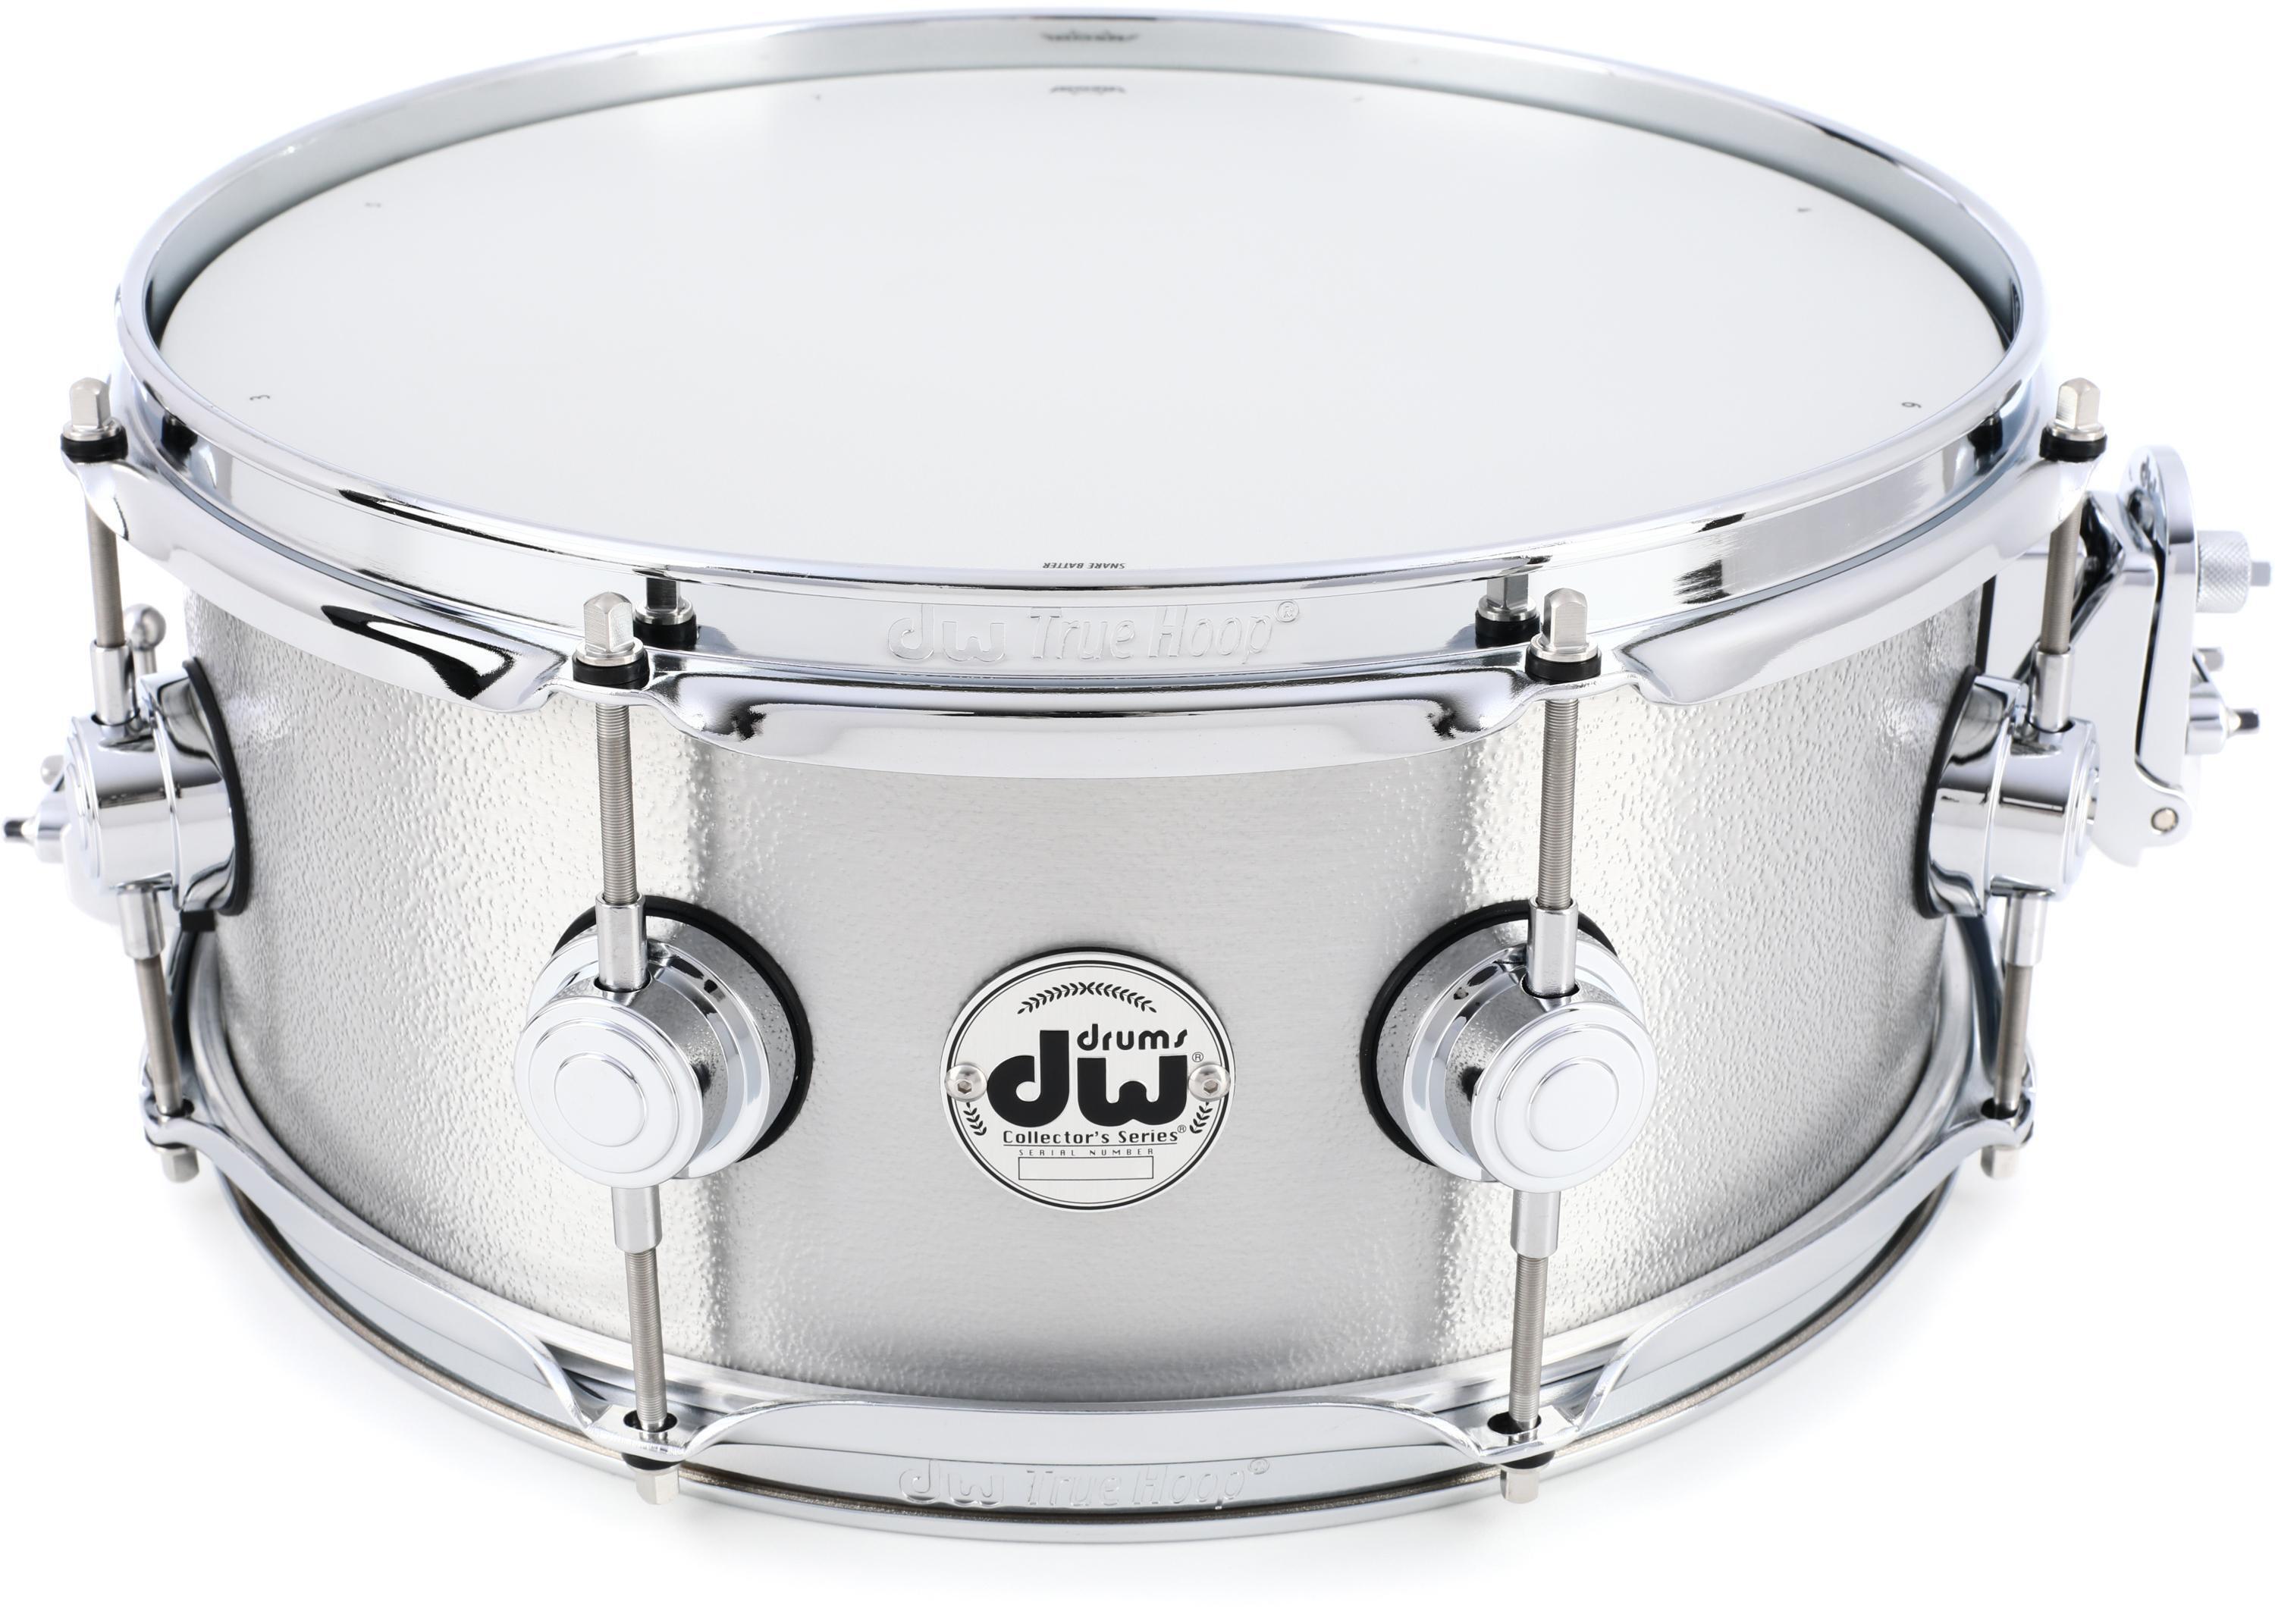 DW Collector's Series Metal Snare Drum - 5.5 x 13 inch - Aluminum